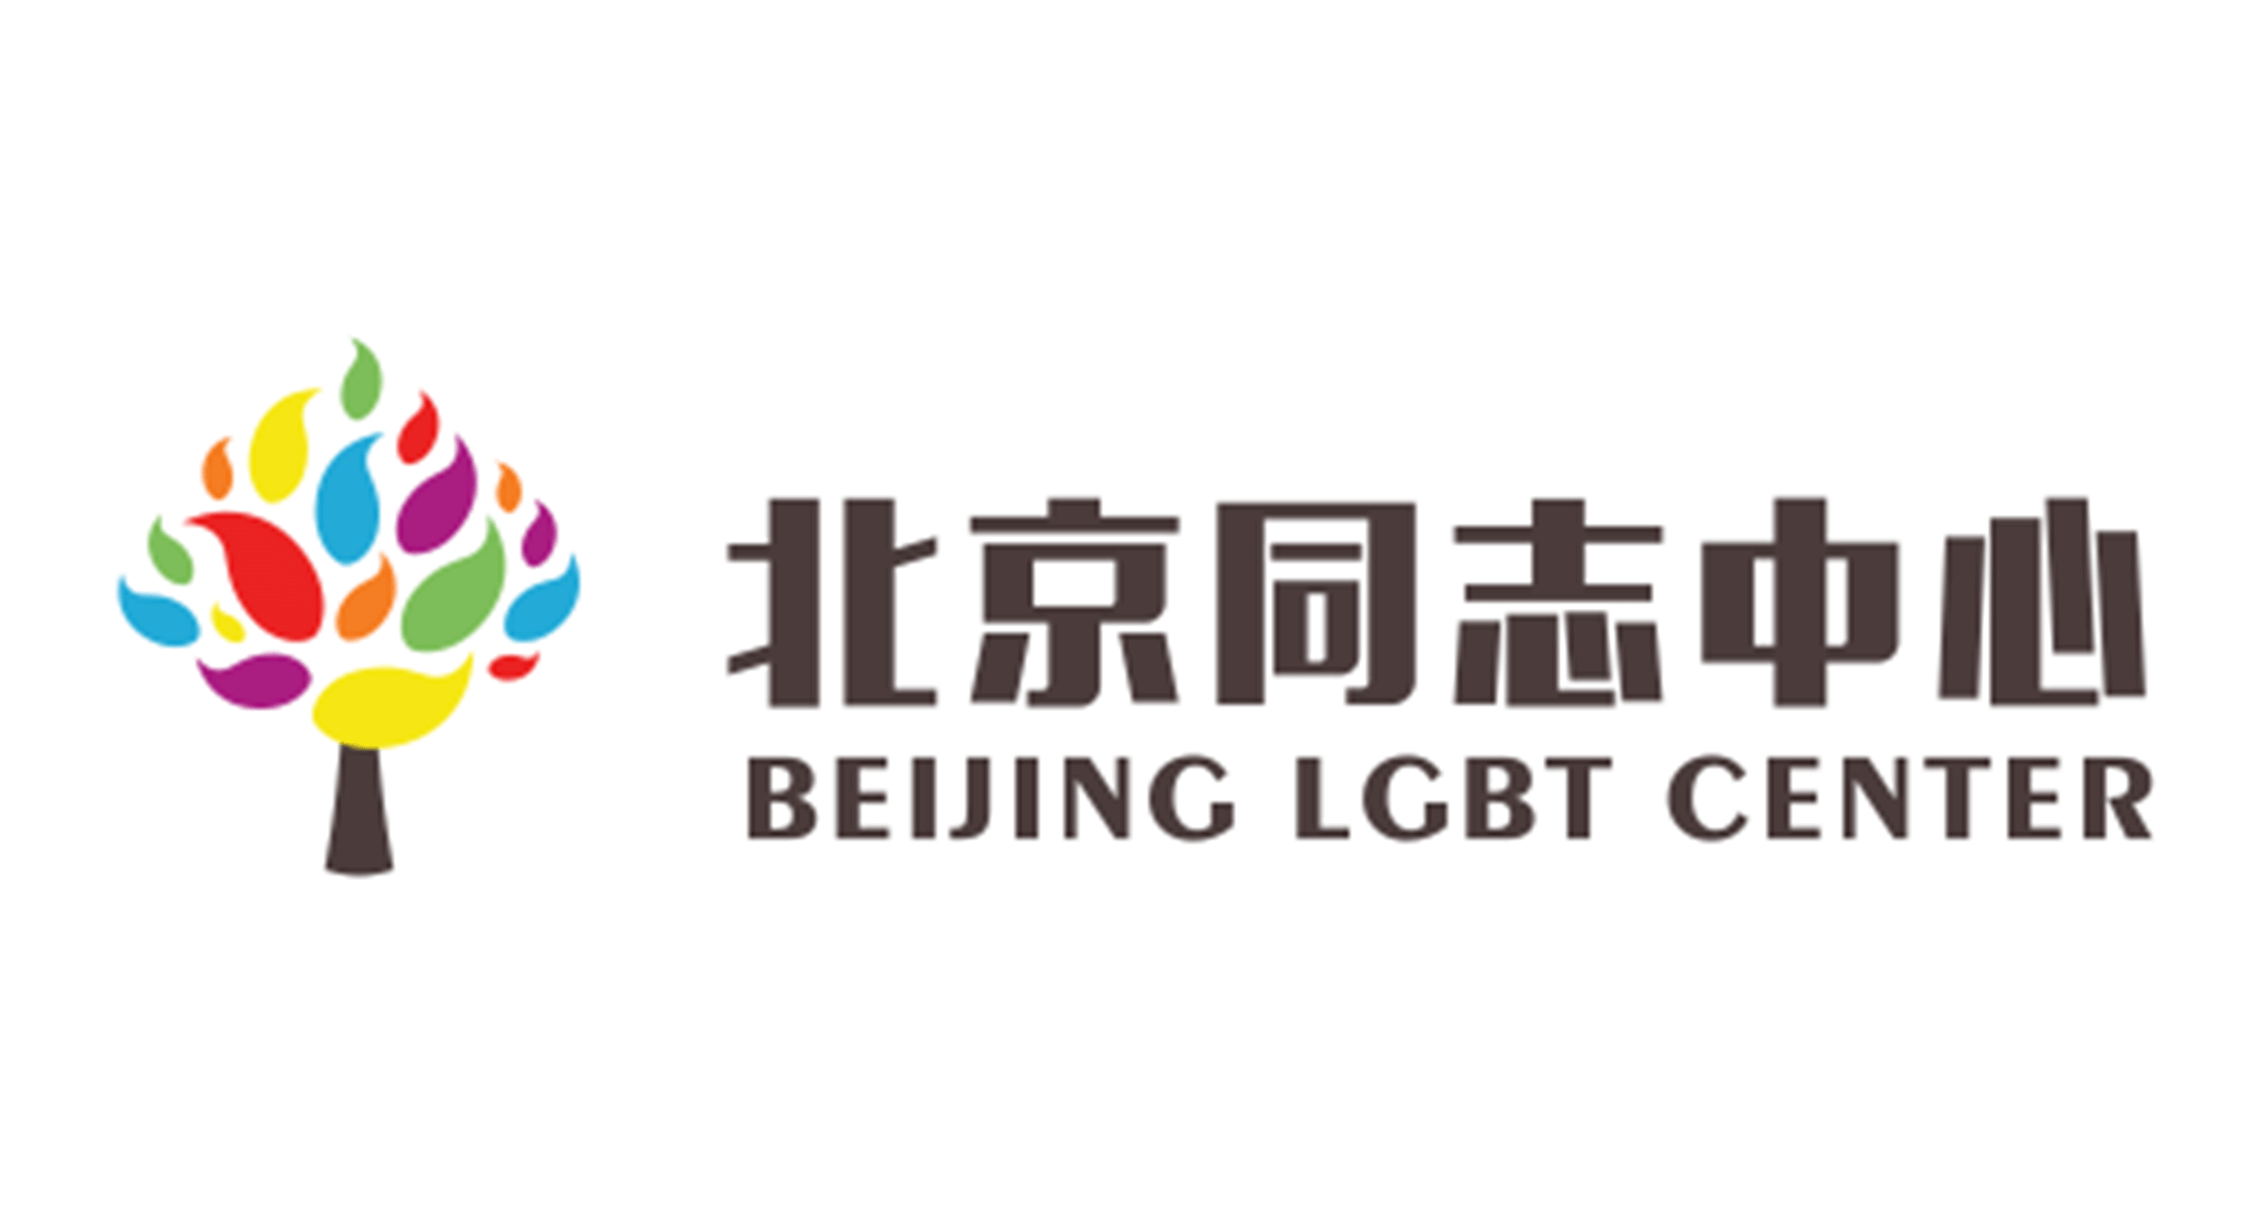 北京同志中心 BEIJING LGBT CENTER